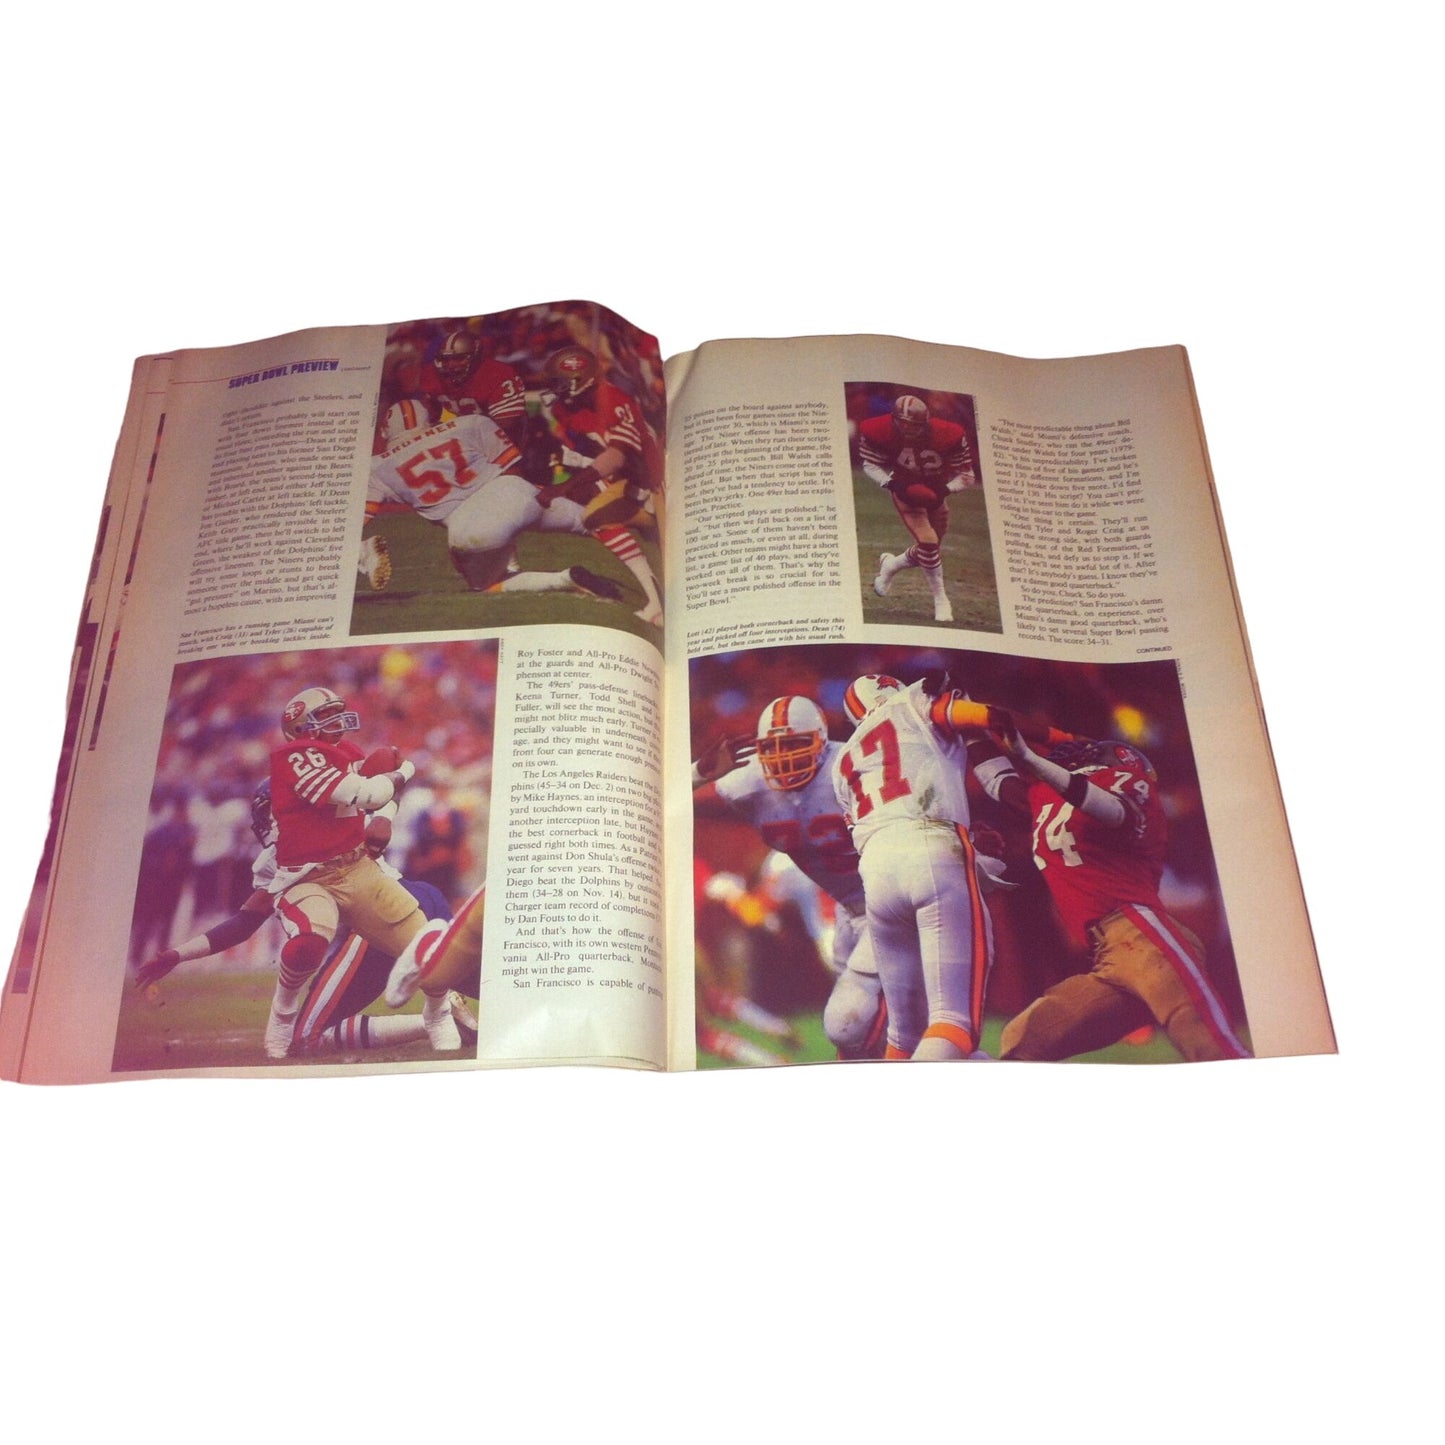 Vintage Sports Illustrated Magazine Jan 21, 1985 Issue-Dan Marino/Joe Montana